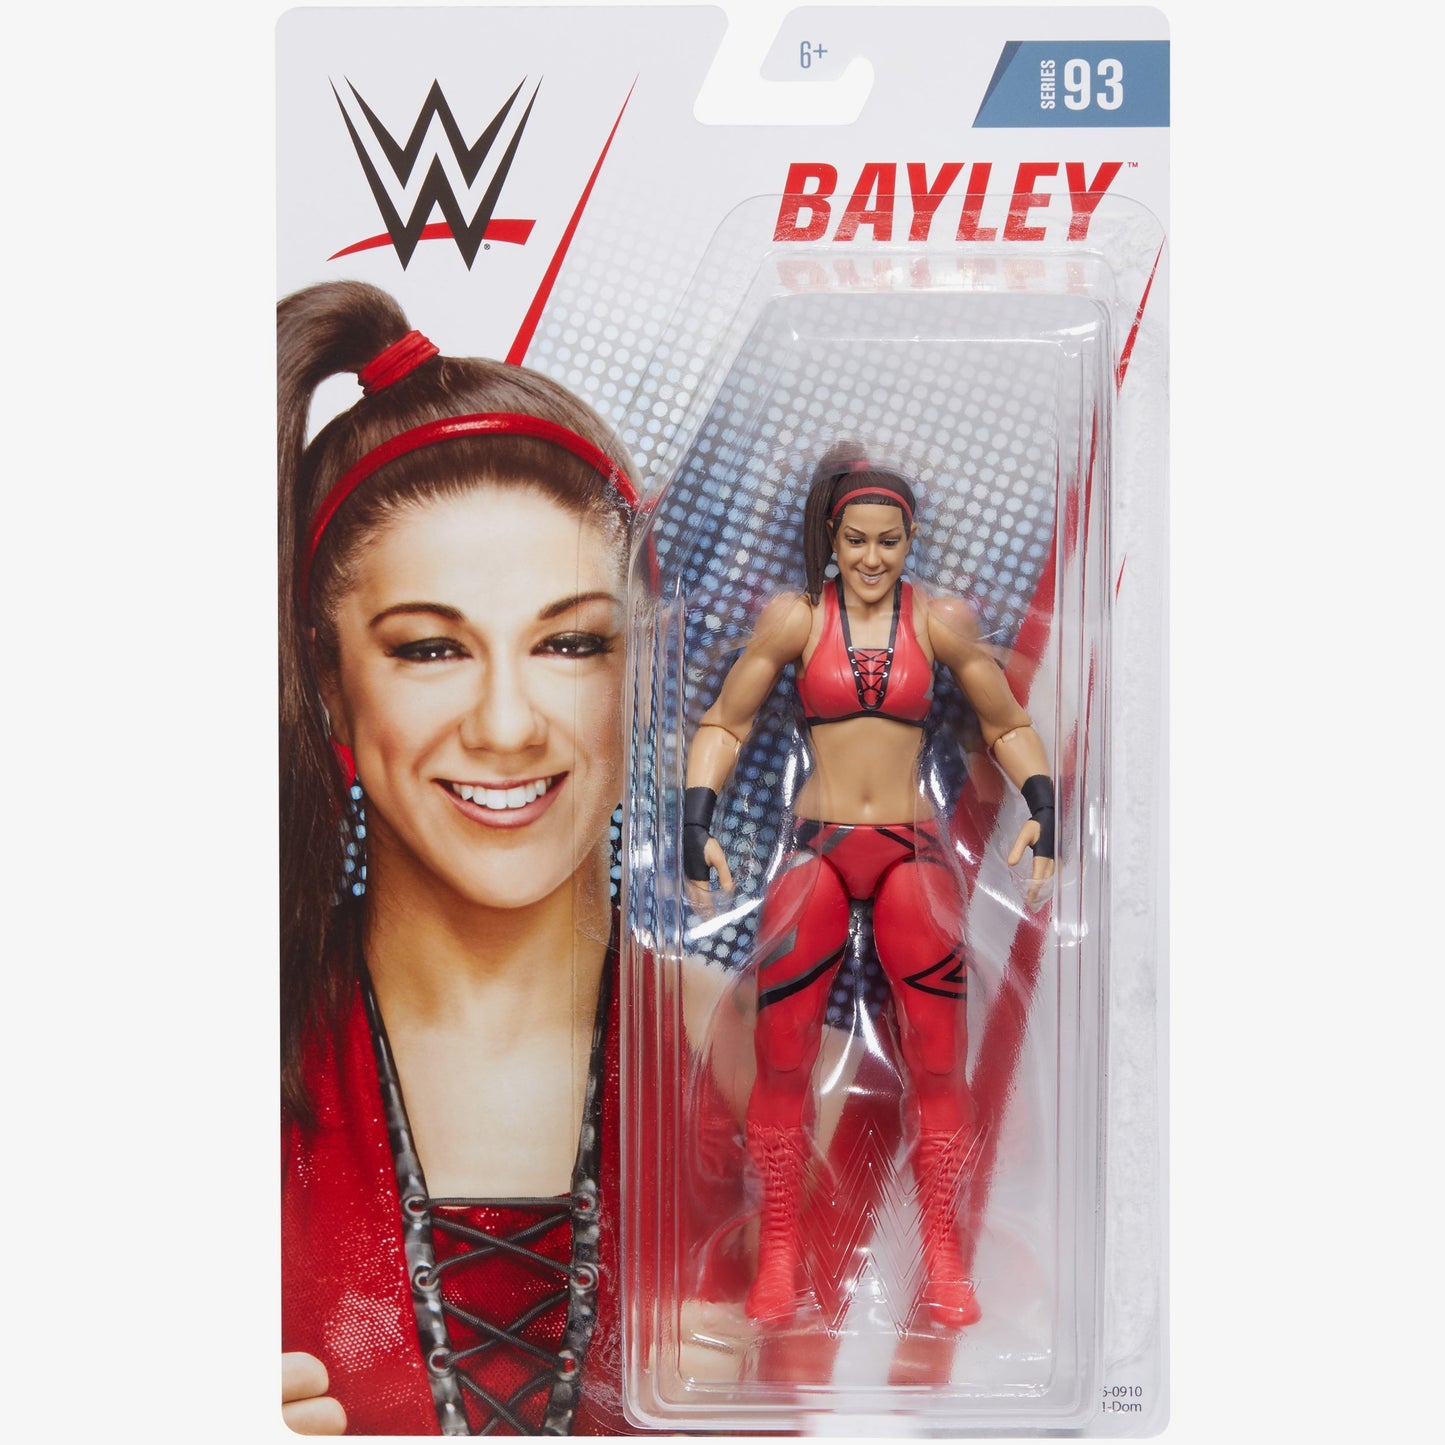 Bayley - WWE Basic Series #93